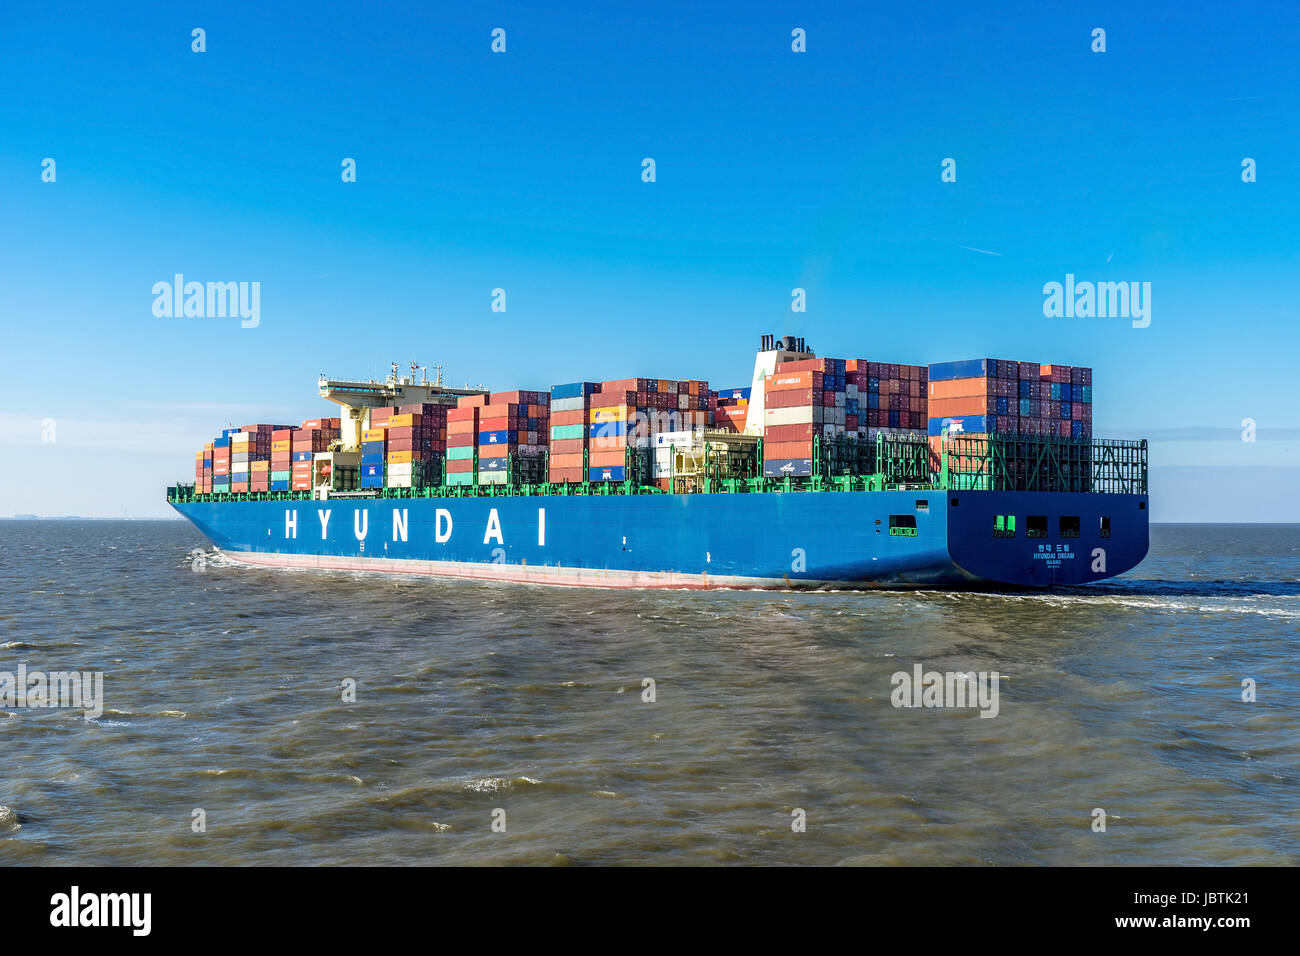 Hyundai Container ship on the Elbe near Hamburg, Hyundai Containerschiff auf der Elbe bei Hamburg Stock Photo